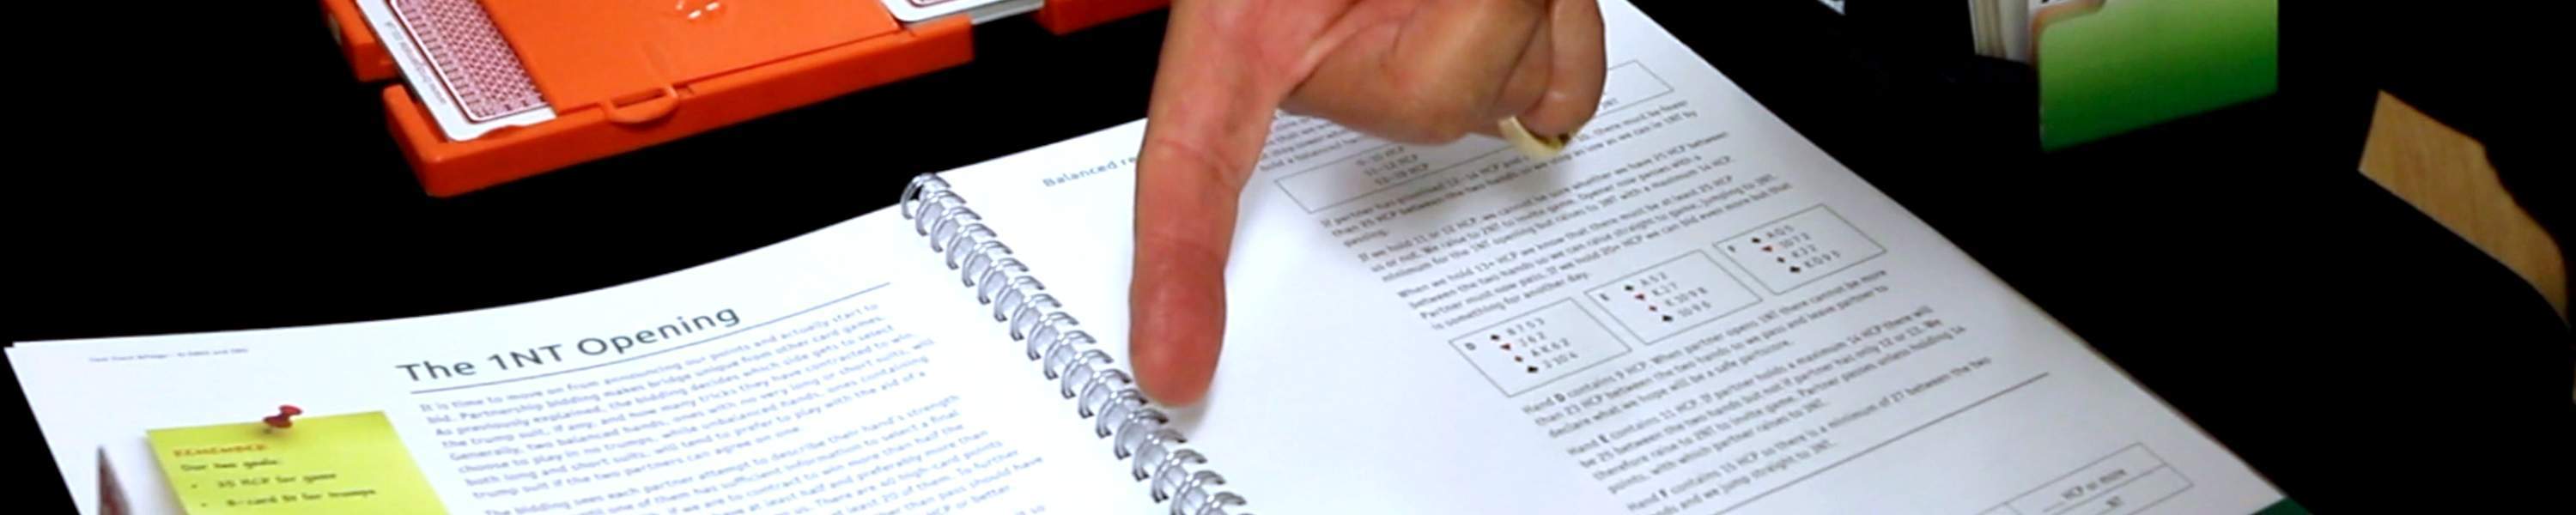 Hand pointing at bridge teaching book